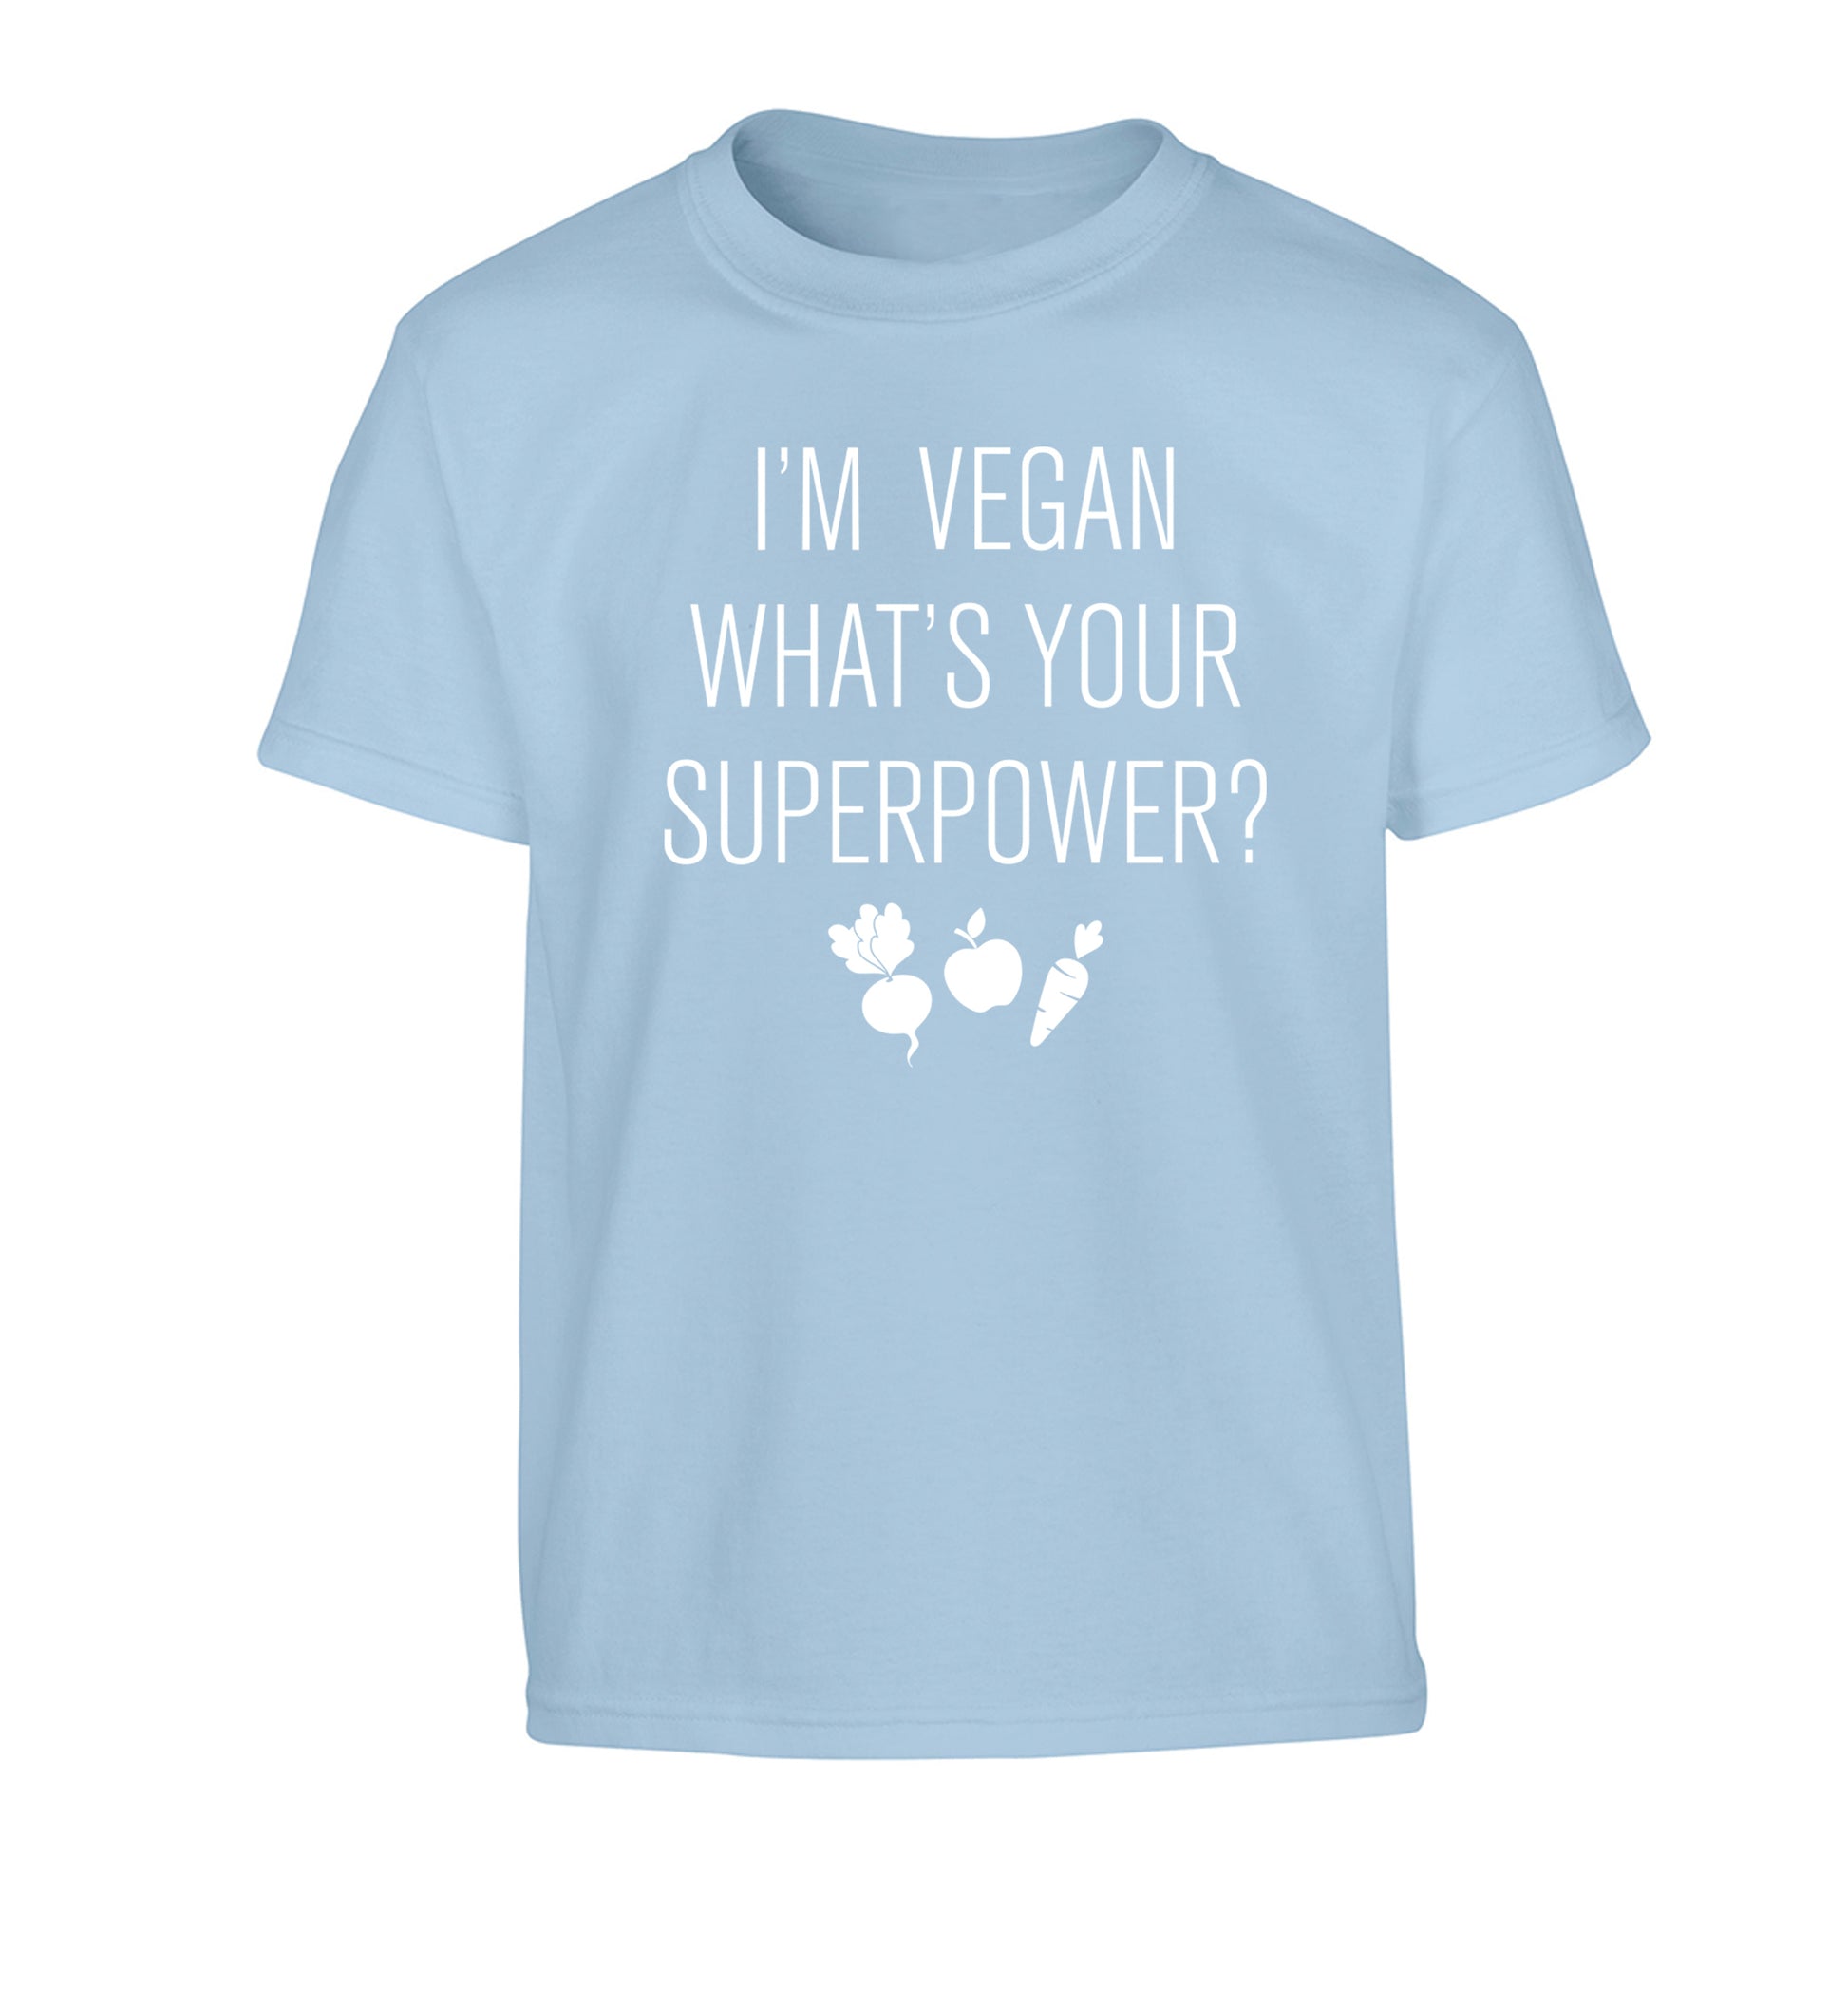 I'm Vegan What's Your Superpower? Children's light blue Tshirt 12-13 Years